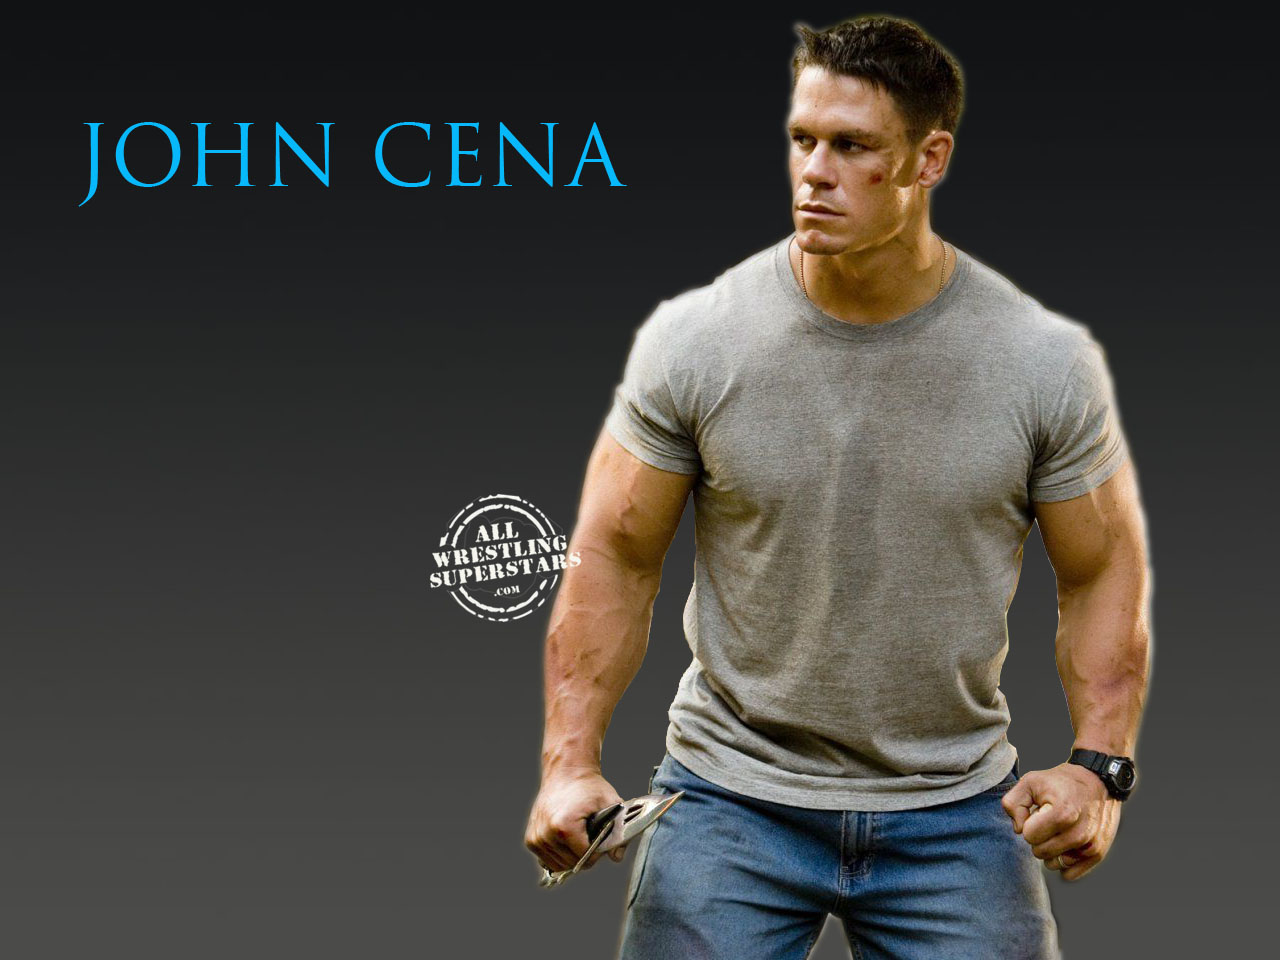 John Cena Wallpaper Hq 480p